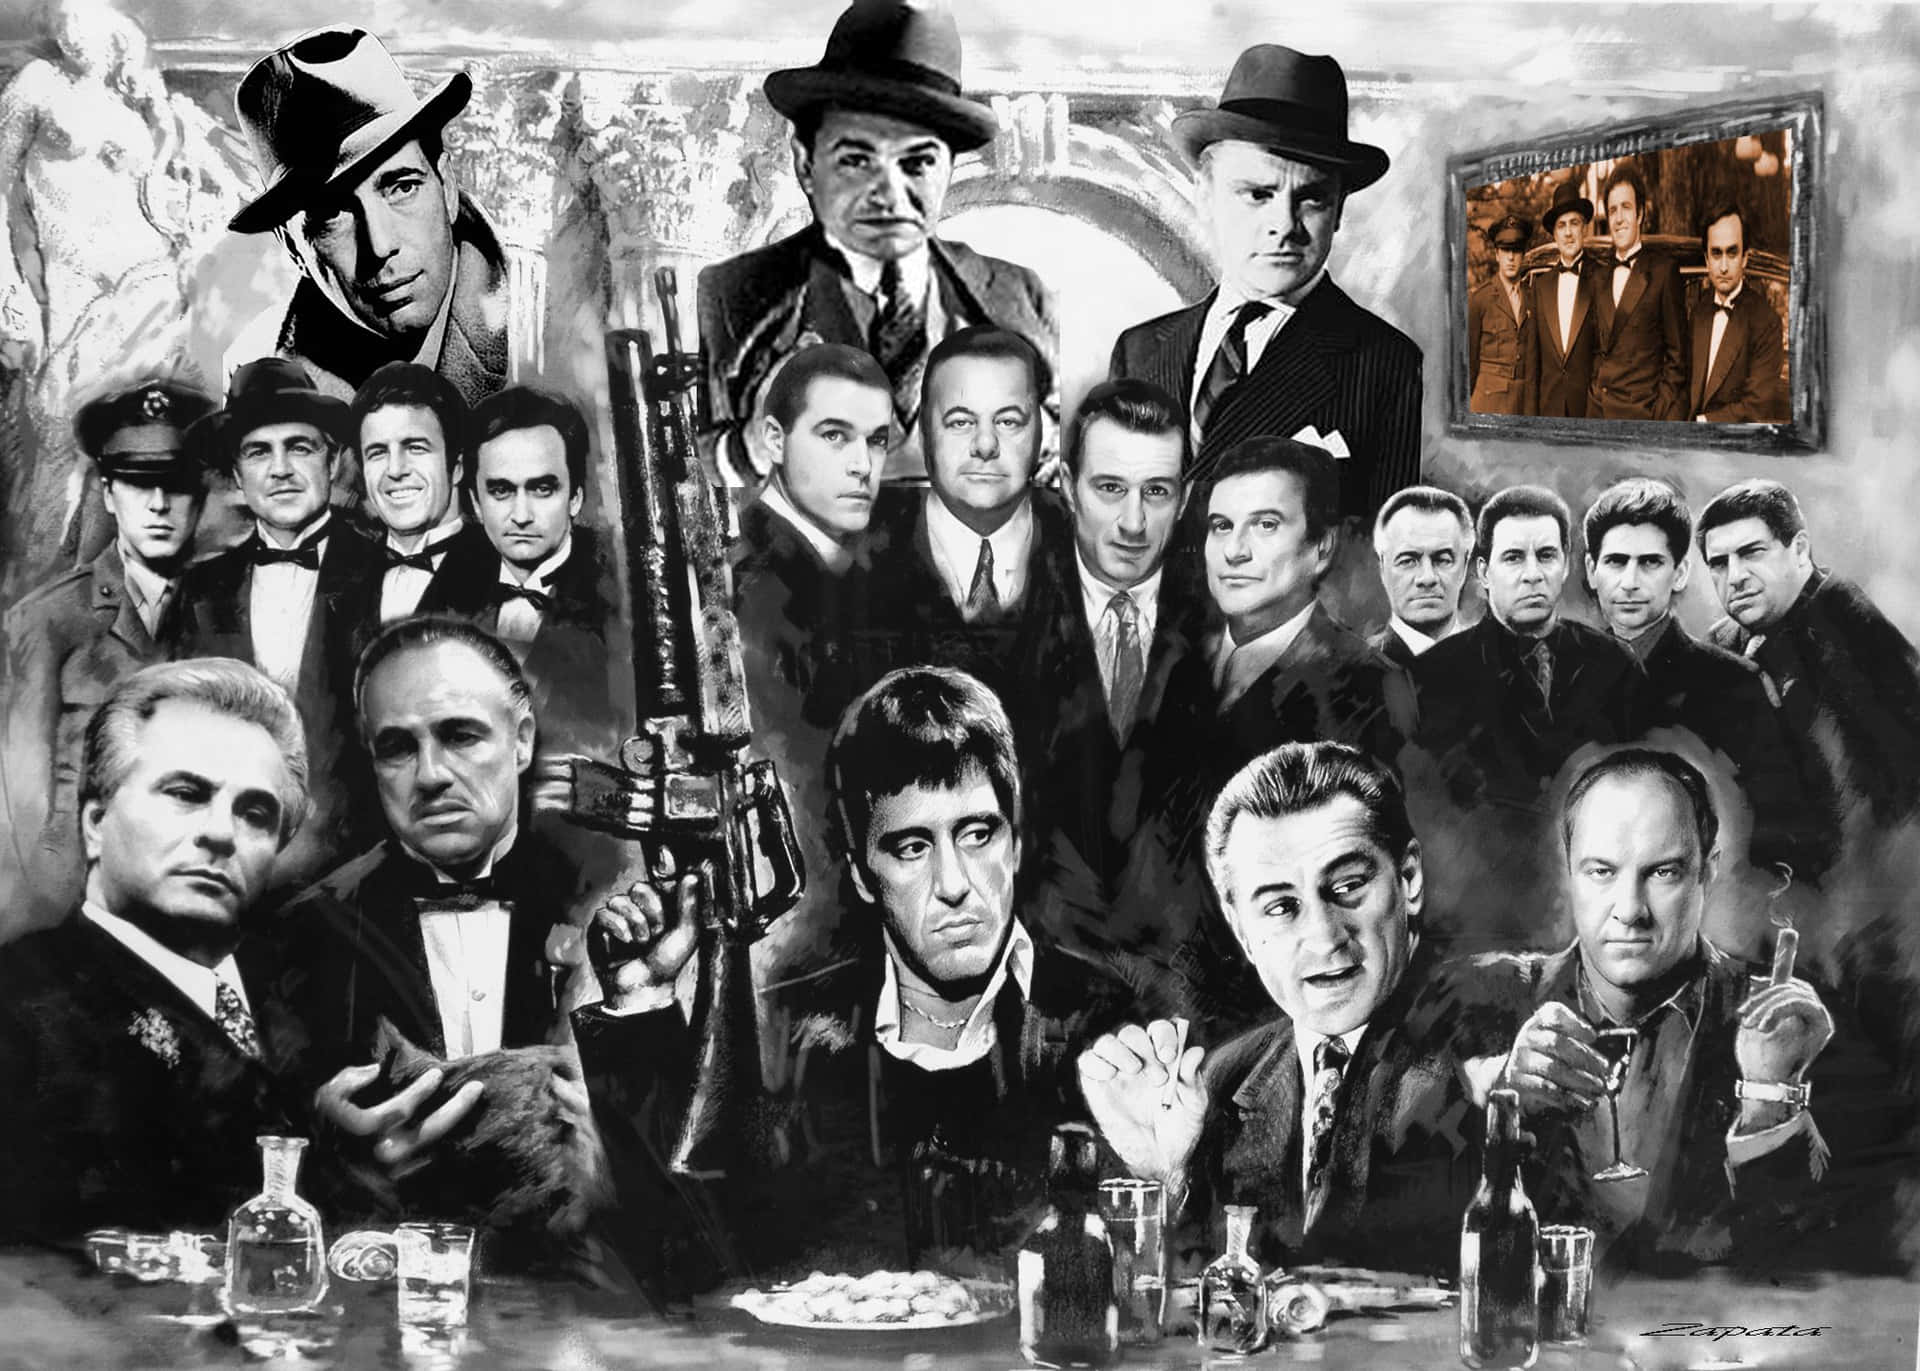 Originaldope Gangster Of Cinema - Original Dope Gangster I Filmindustrin. Wallpaper